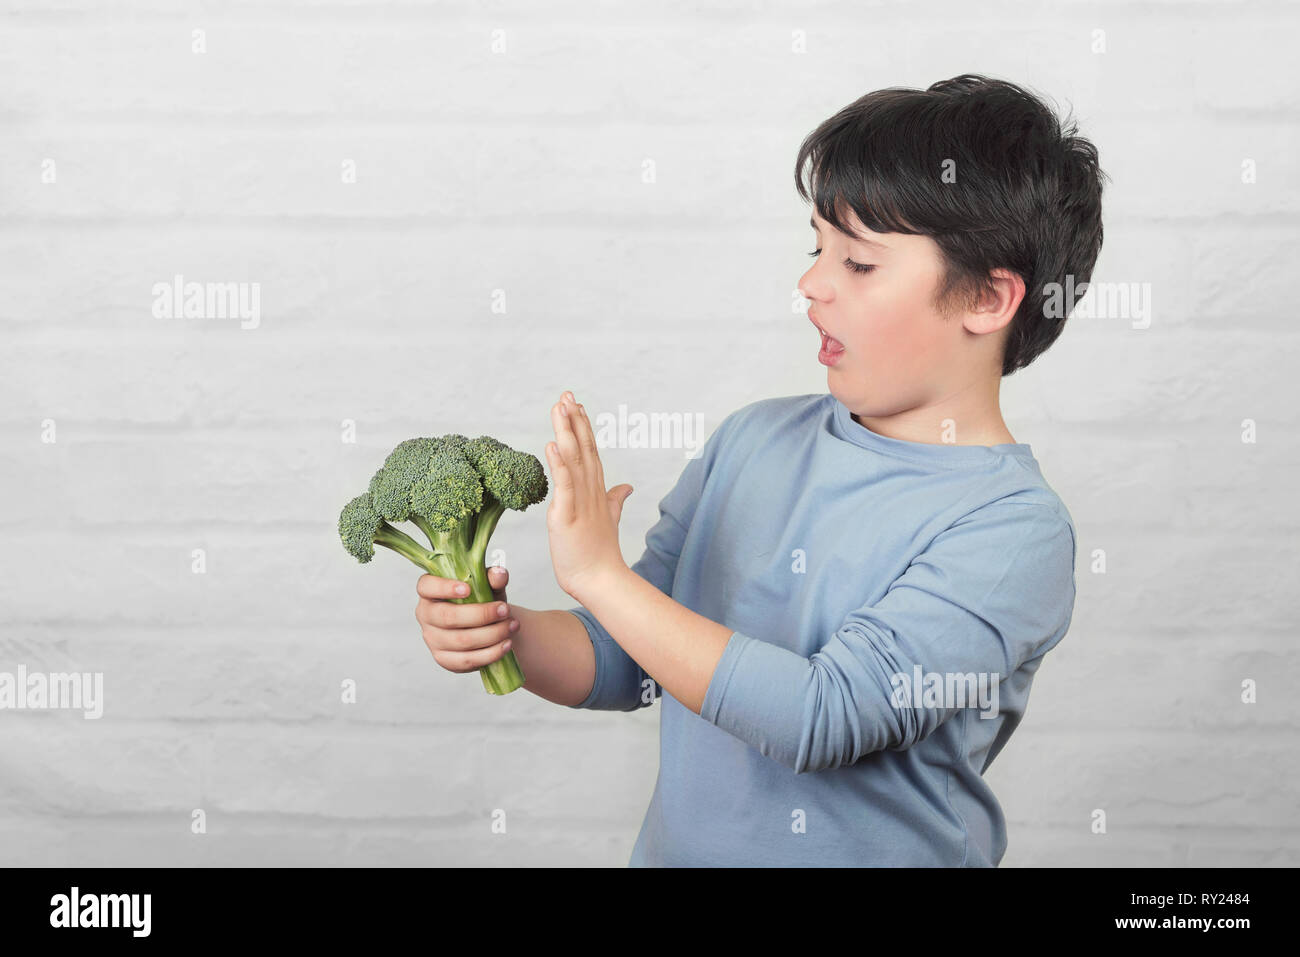 Child do not like to broccoli against brick background Stock Photo